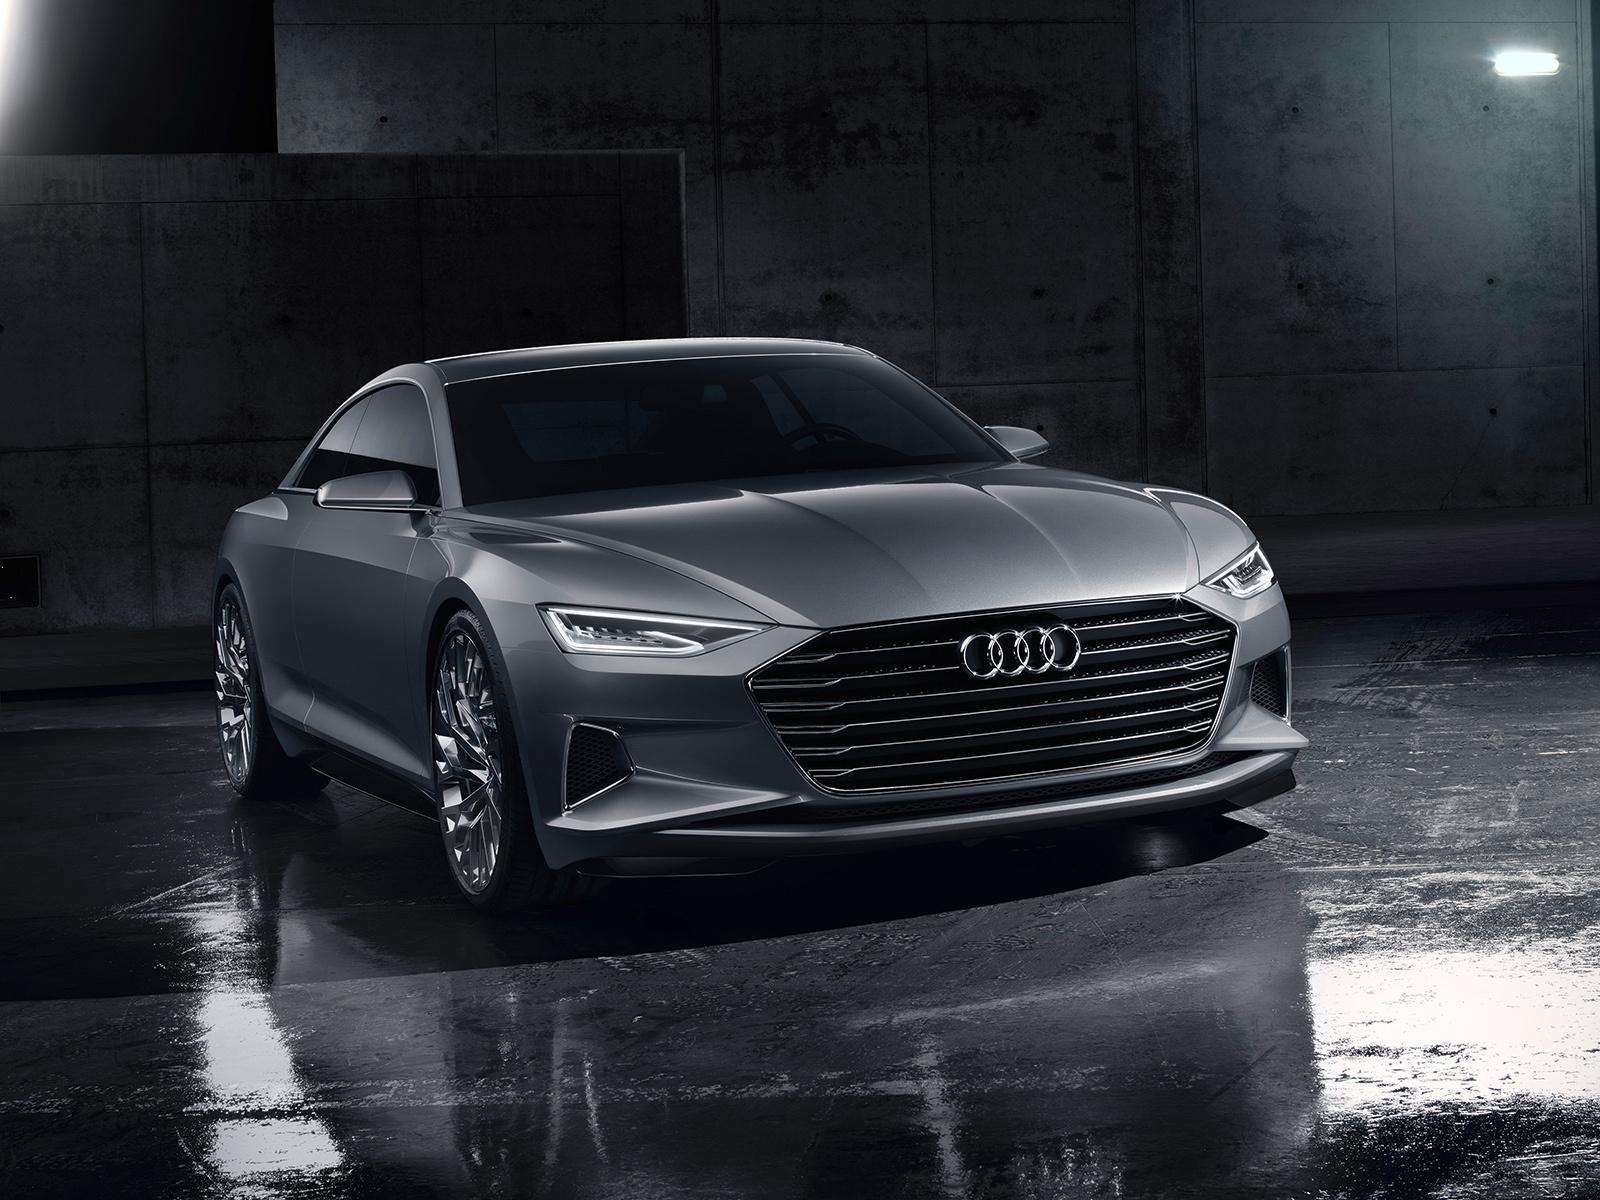 Audi A9 2016 Concept Wallpaper Image Photo Picture Background